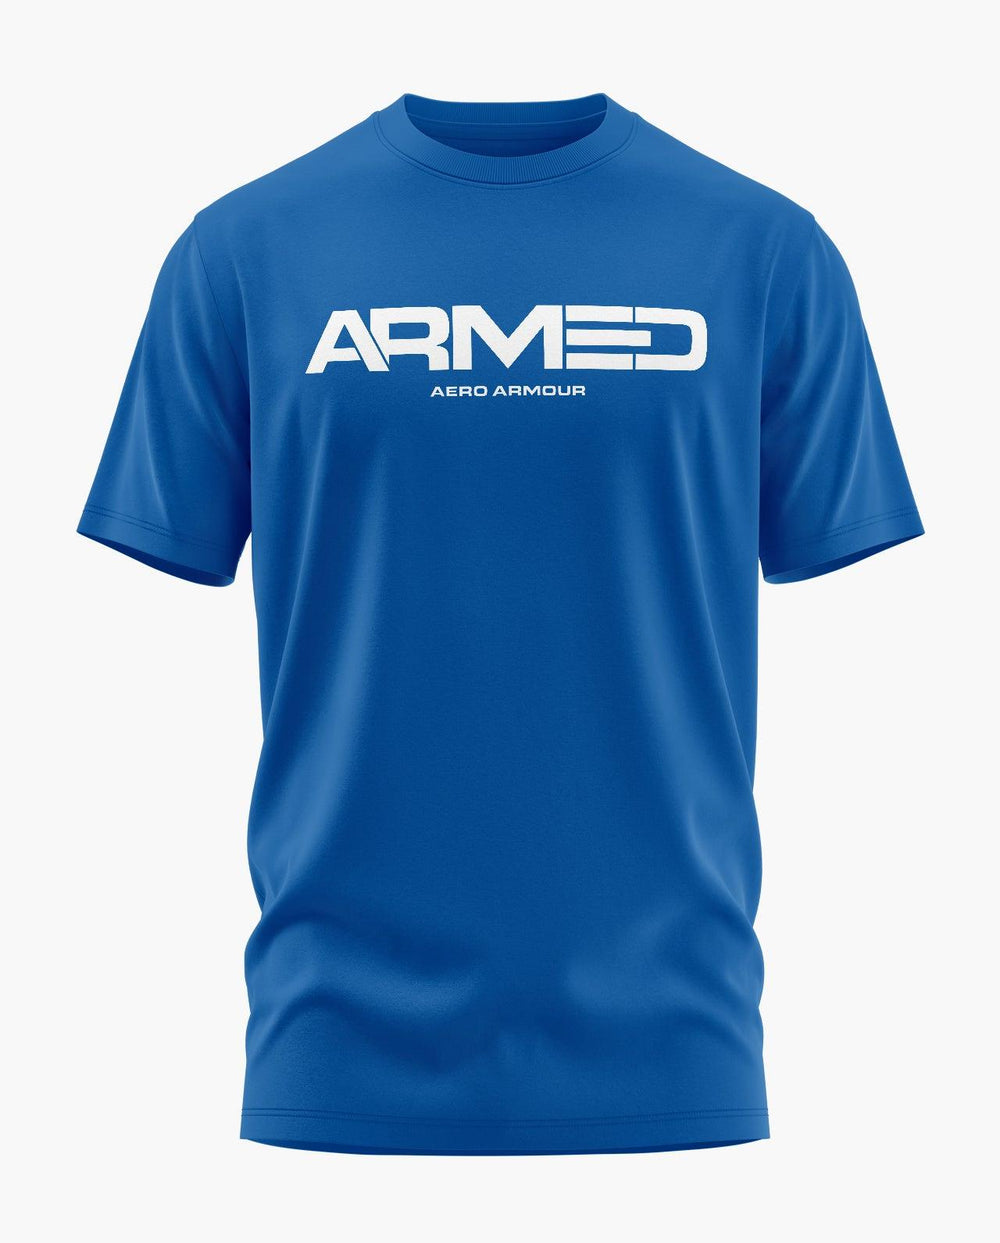 Armed T-Shirt - Aero Armour